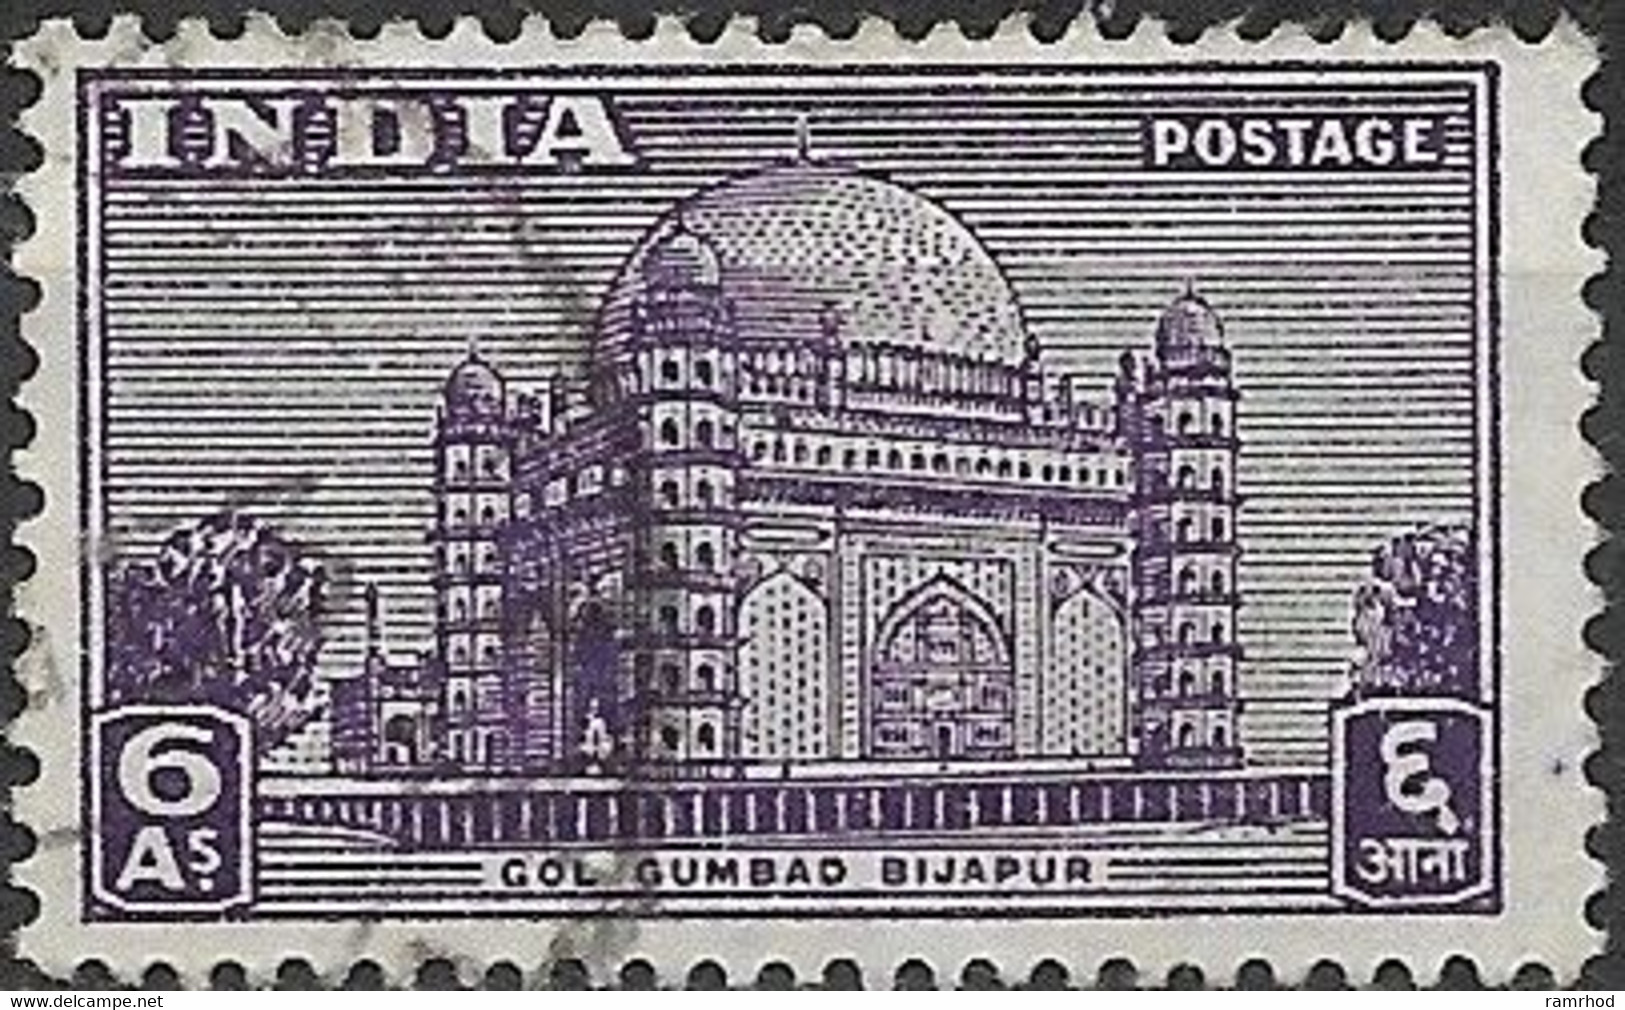 INDIA 1949 Gol Gumbad, Bijapur - 6a - Violet FU - Used Stamps